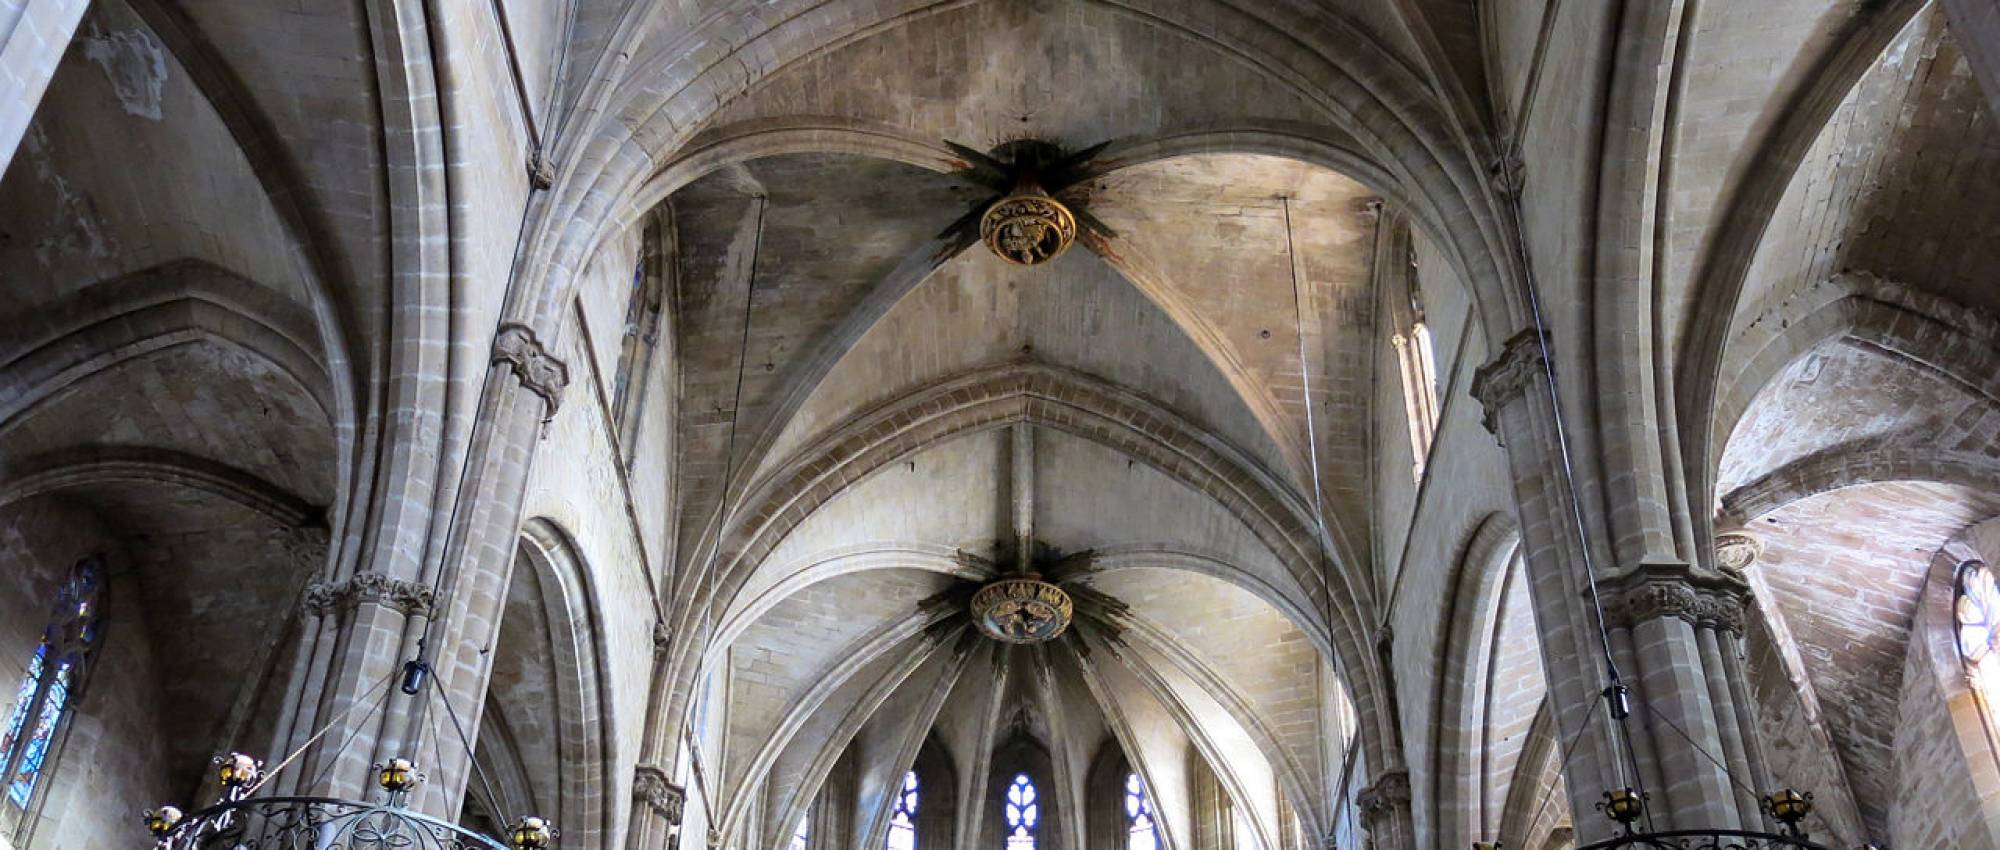 Nave central de la catedral de Sta. Maria de Tortosa. Enric / Wikimedia Commons. CC BY-SA 3.0